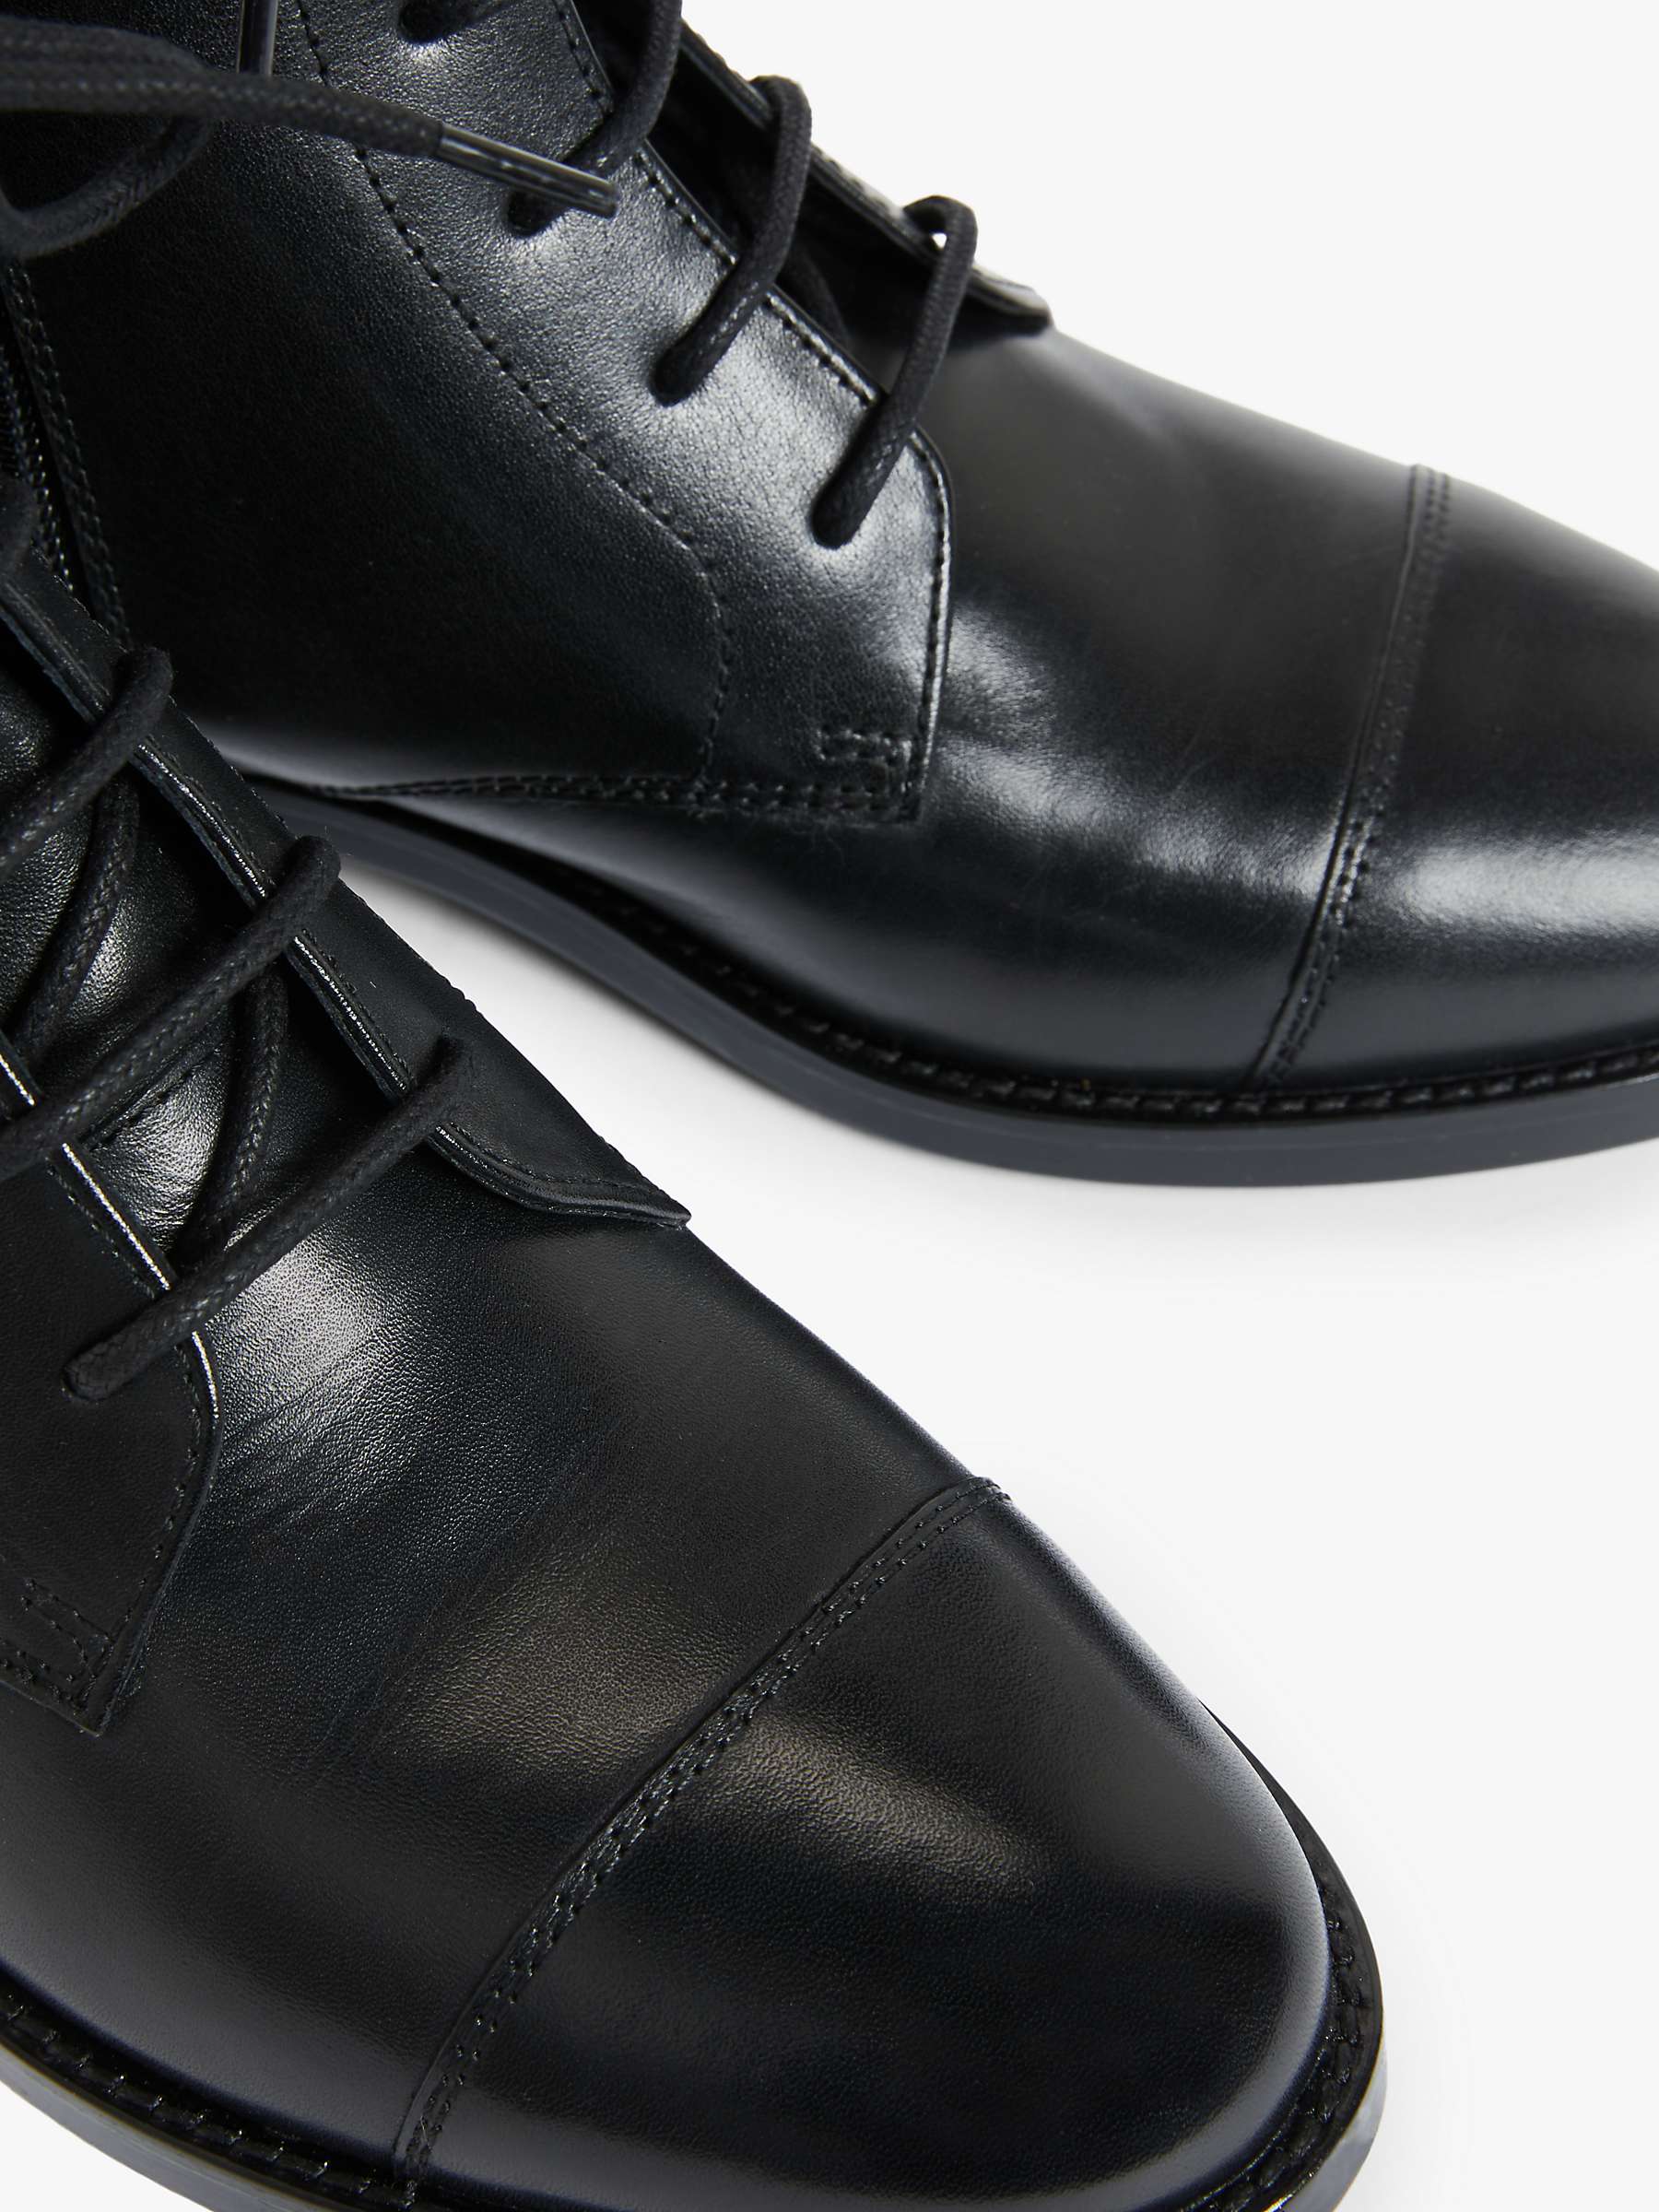 Kin Prosper Leather Ankle Boots, Black at John Lewis & Partners